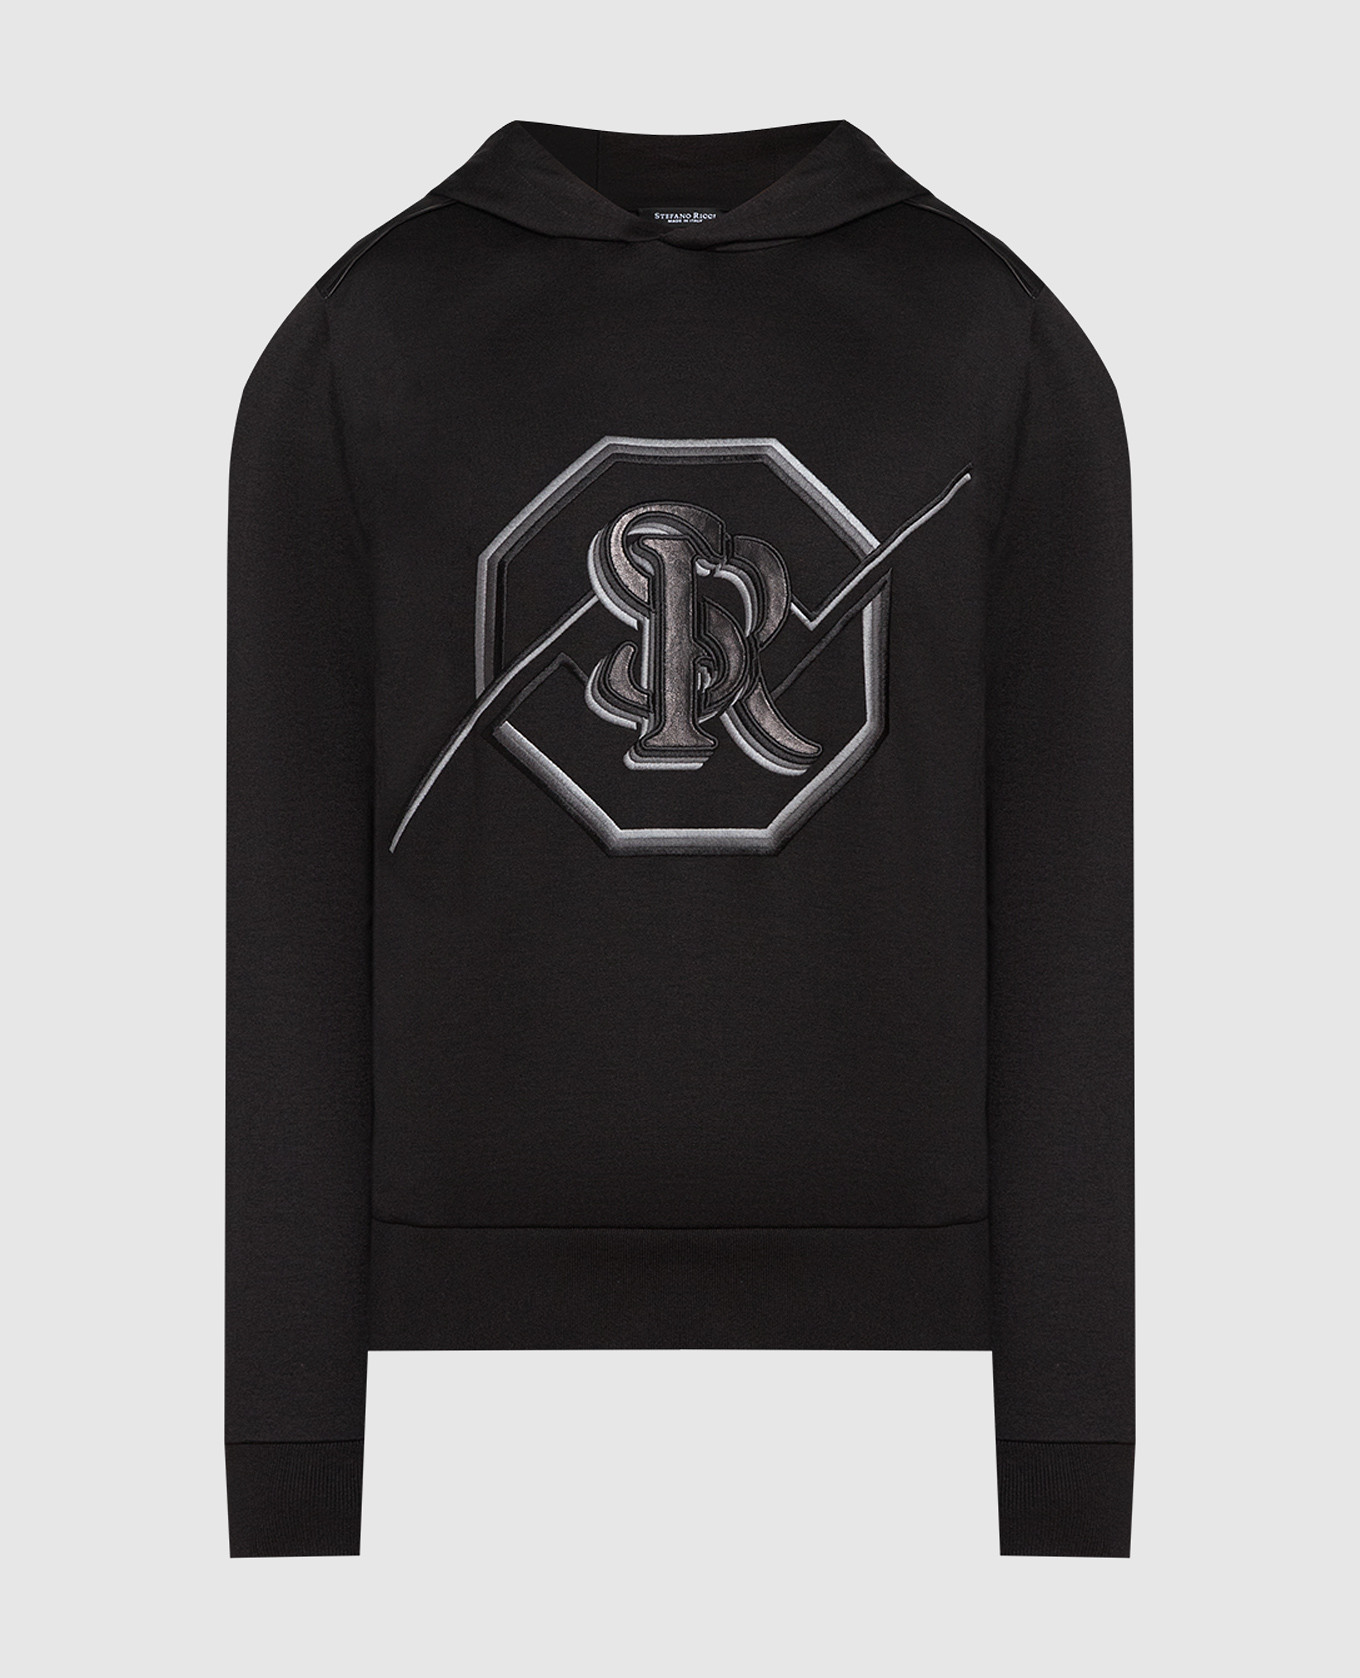 Black hoodie with logo